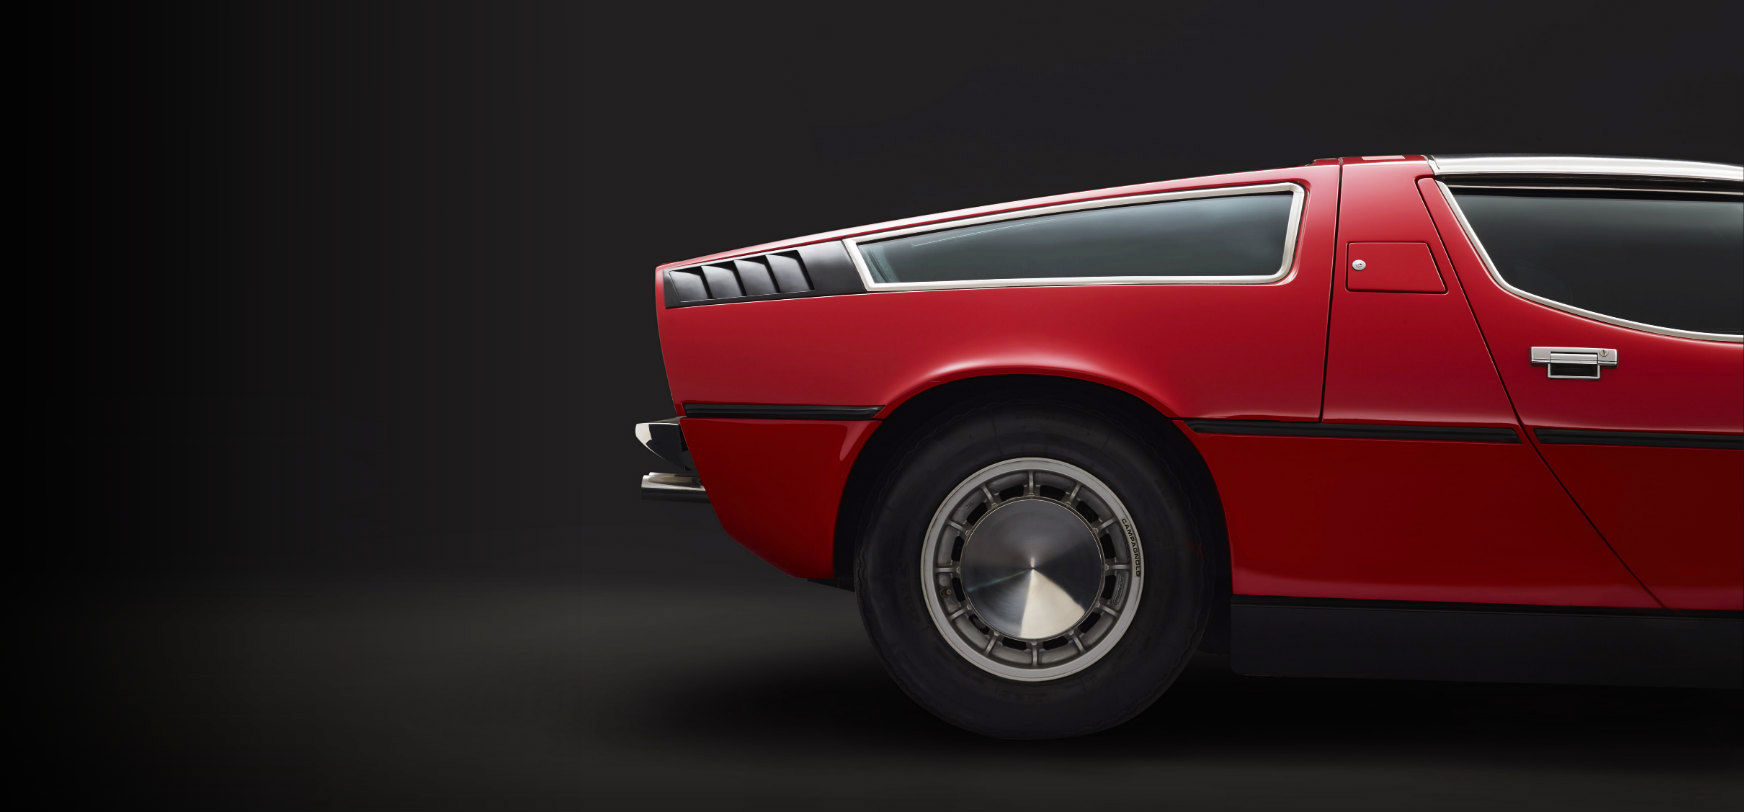 Maserati Classic: klassisches rotes Maserati Automobil